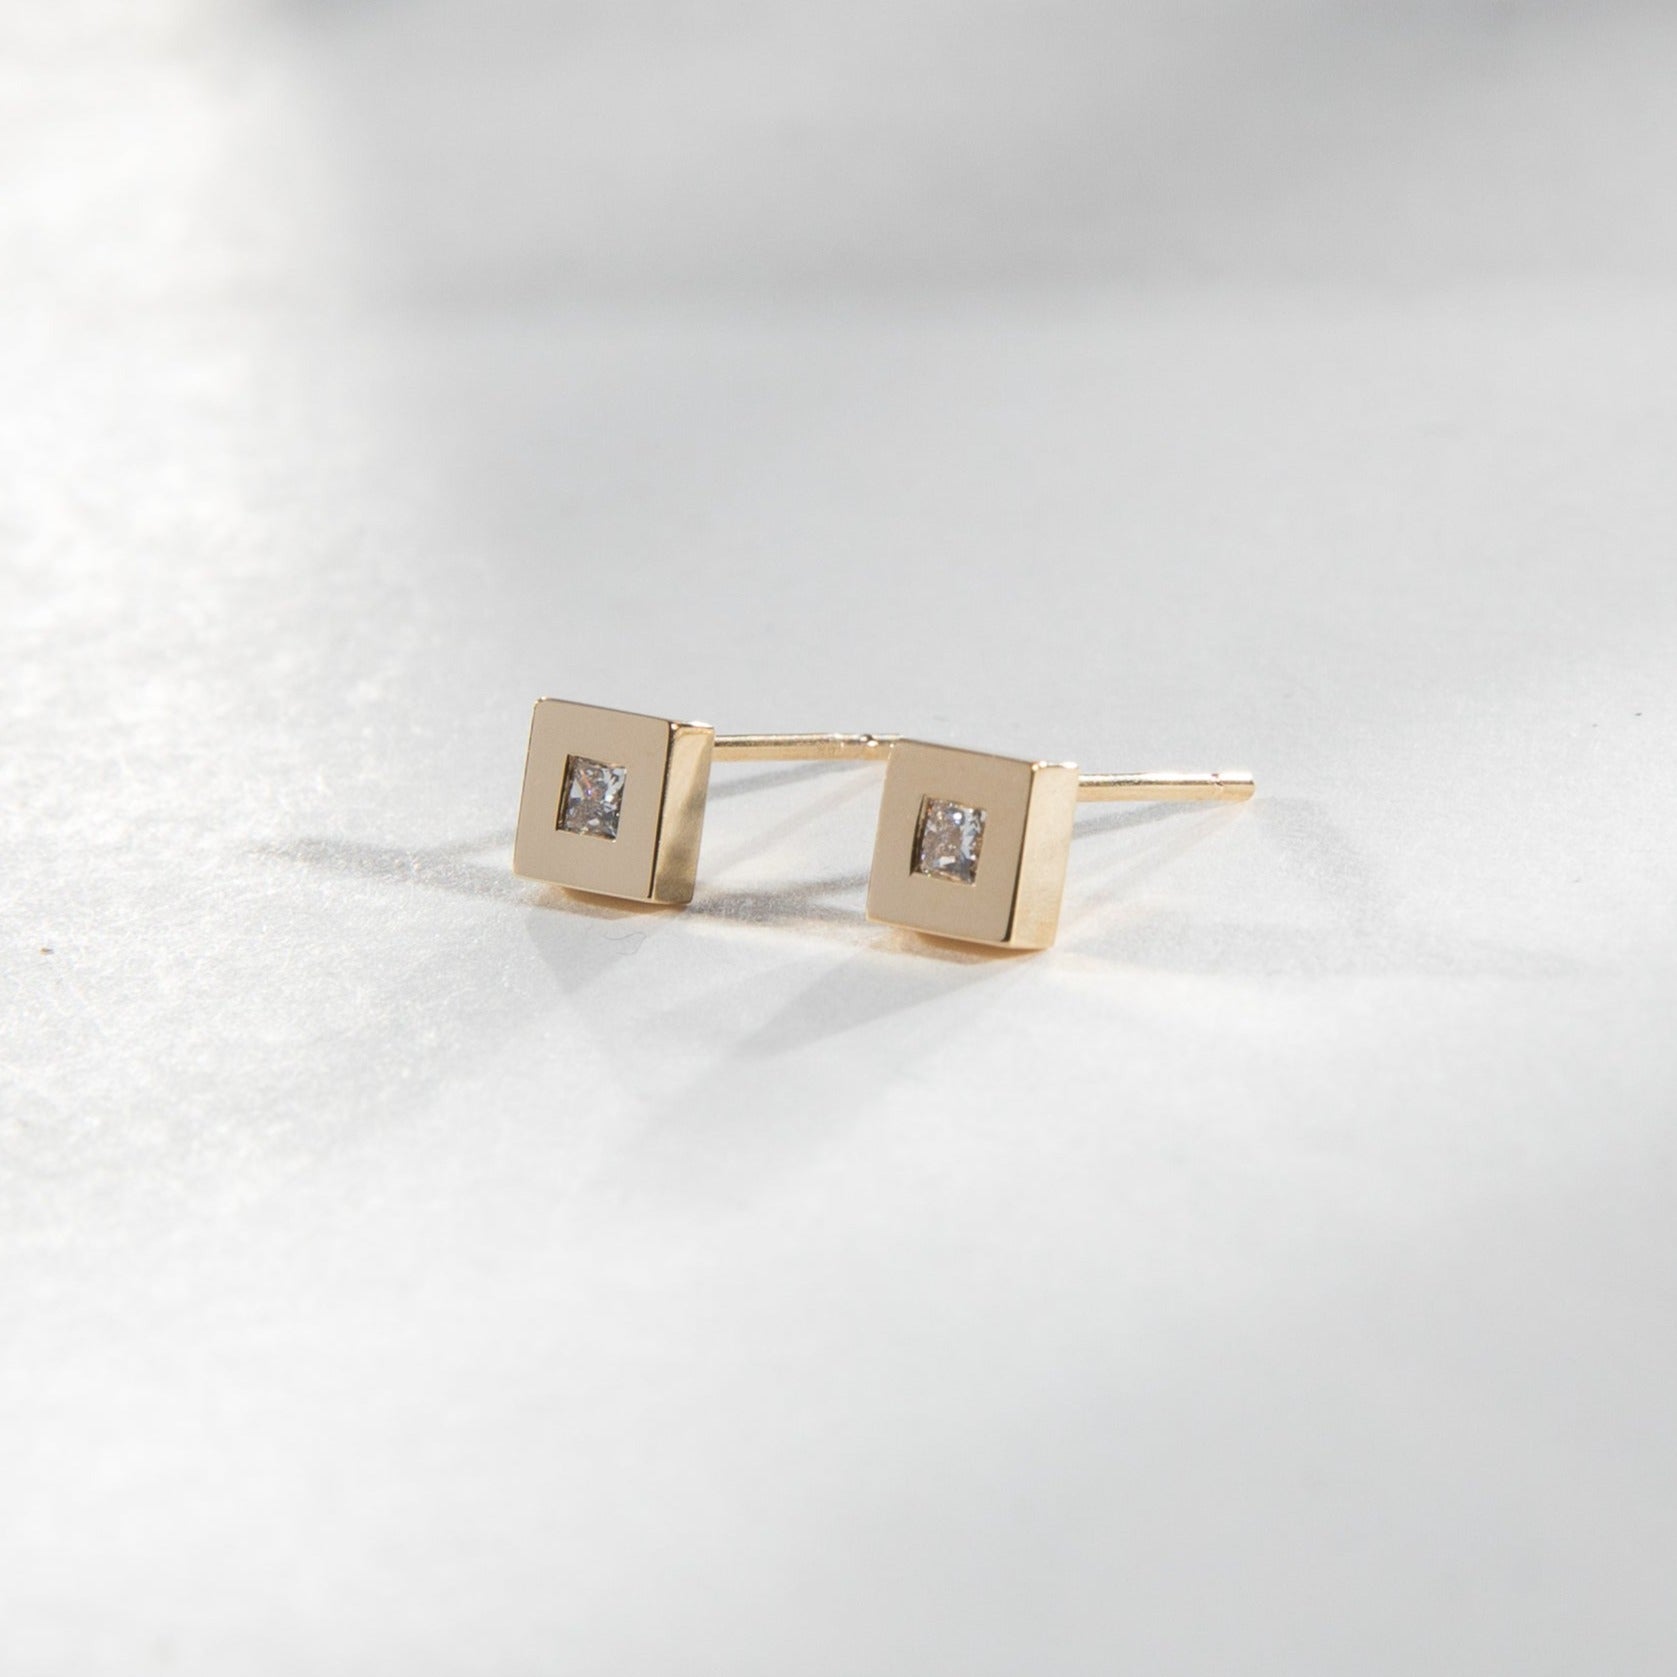 Sada Handmade Earrings in 14k Gold set with lab-grown diamonds By SHW Fine Jewelry NYC